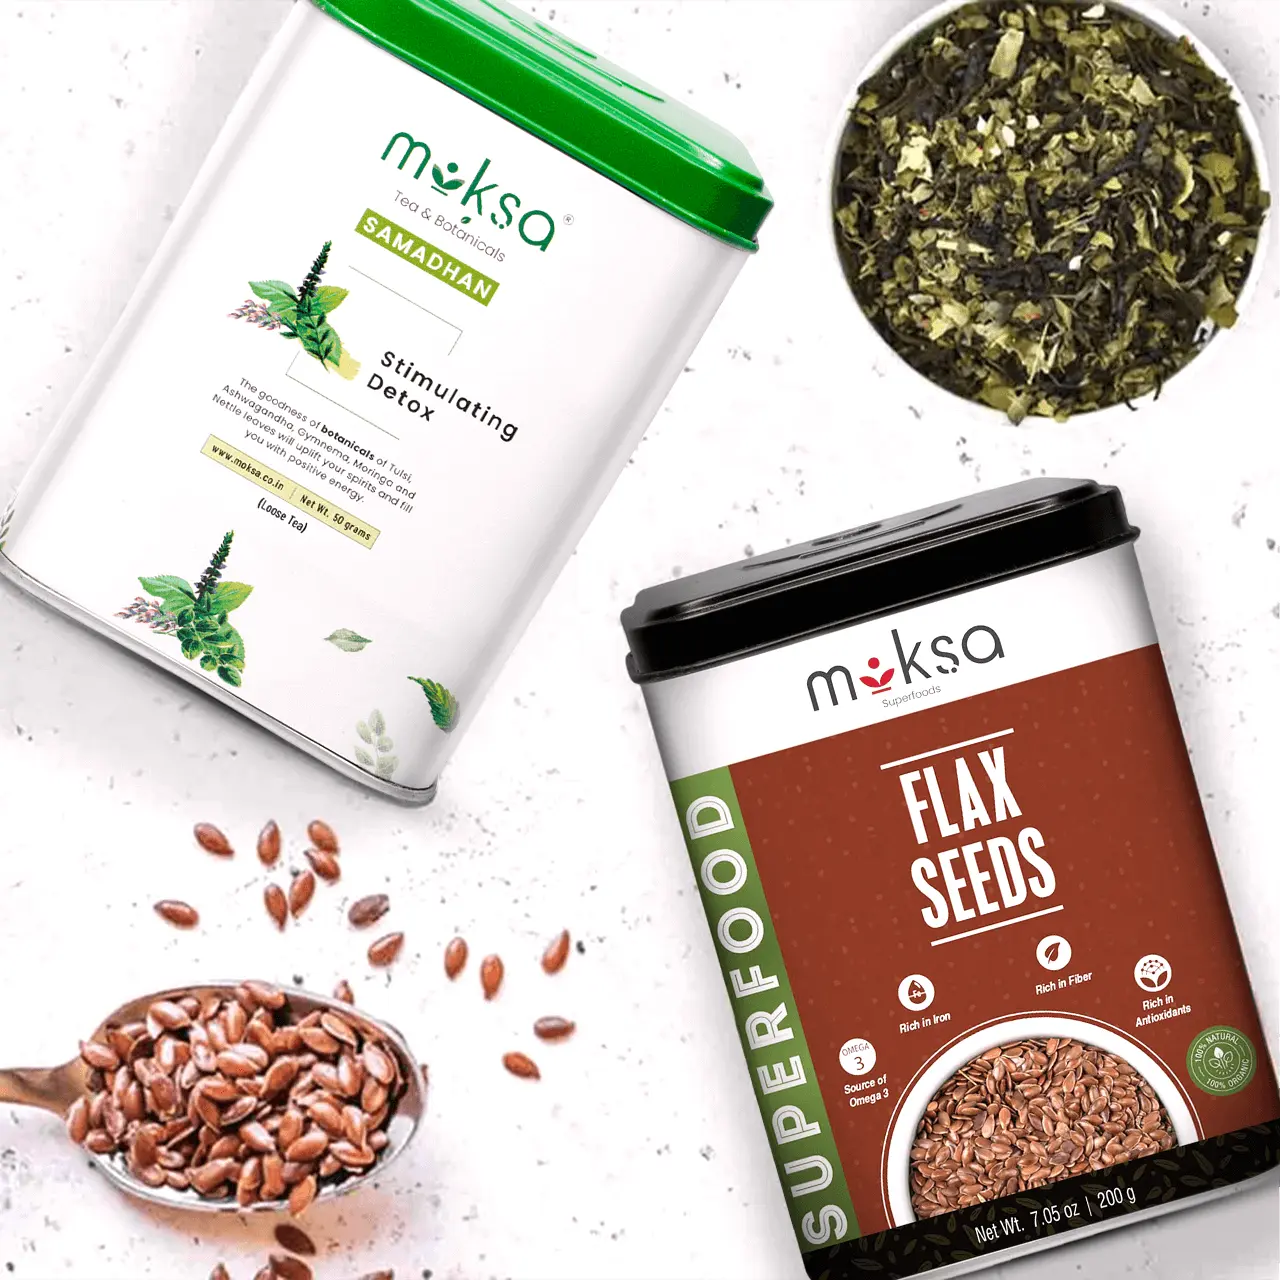 Flax Seeds 200gm and Stimulating Detox Tea 50gm Combo